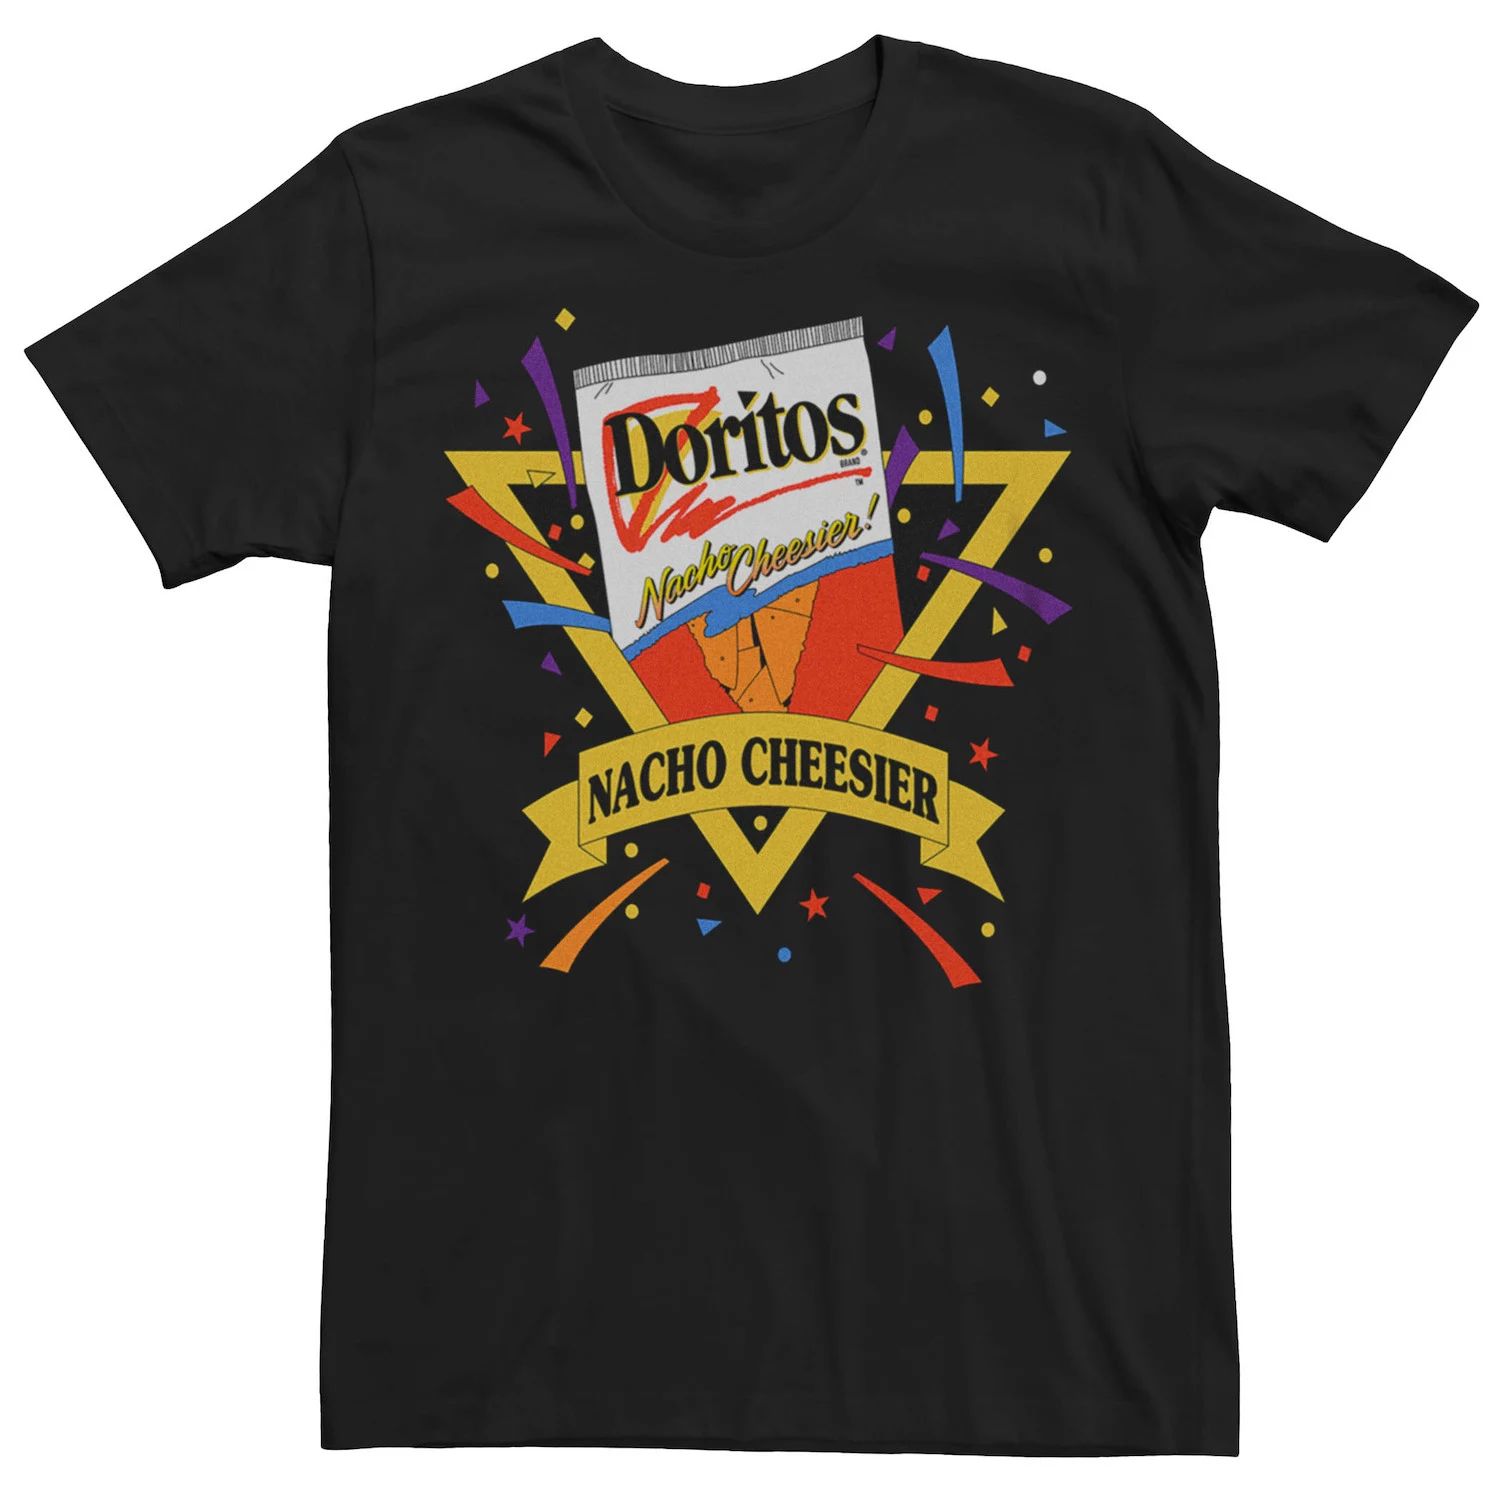 Мужская футболка Doritos Nacho Cheesier Vintage с логотипом Licensed Character